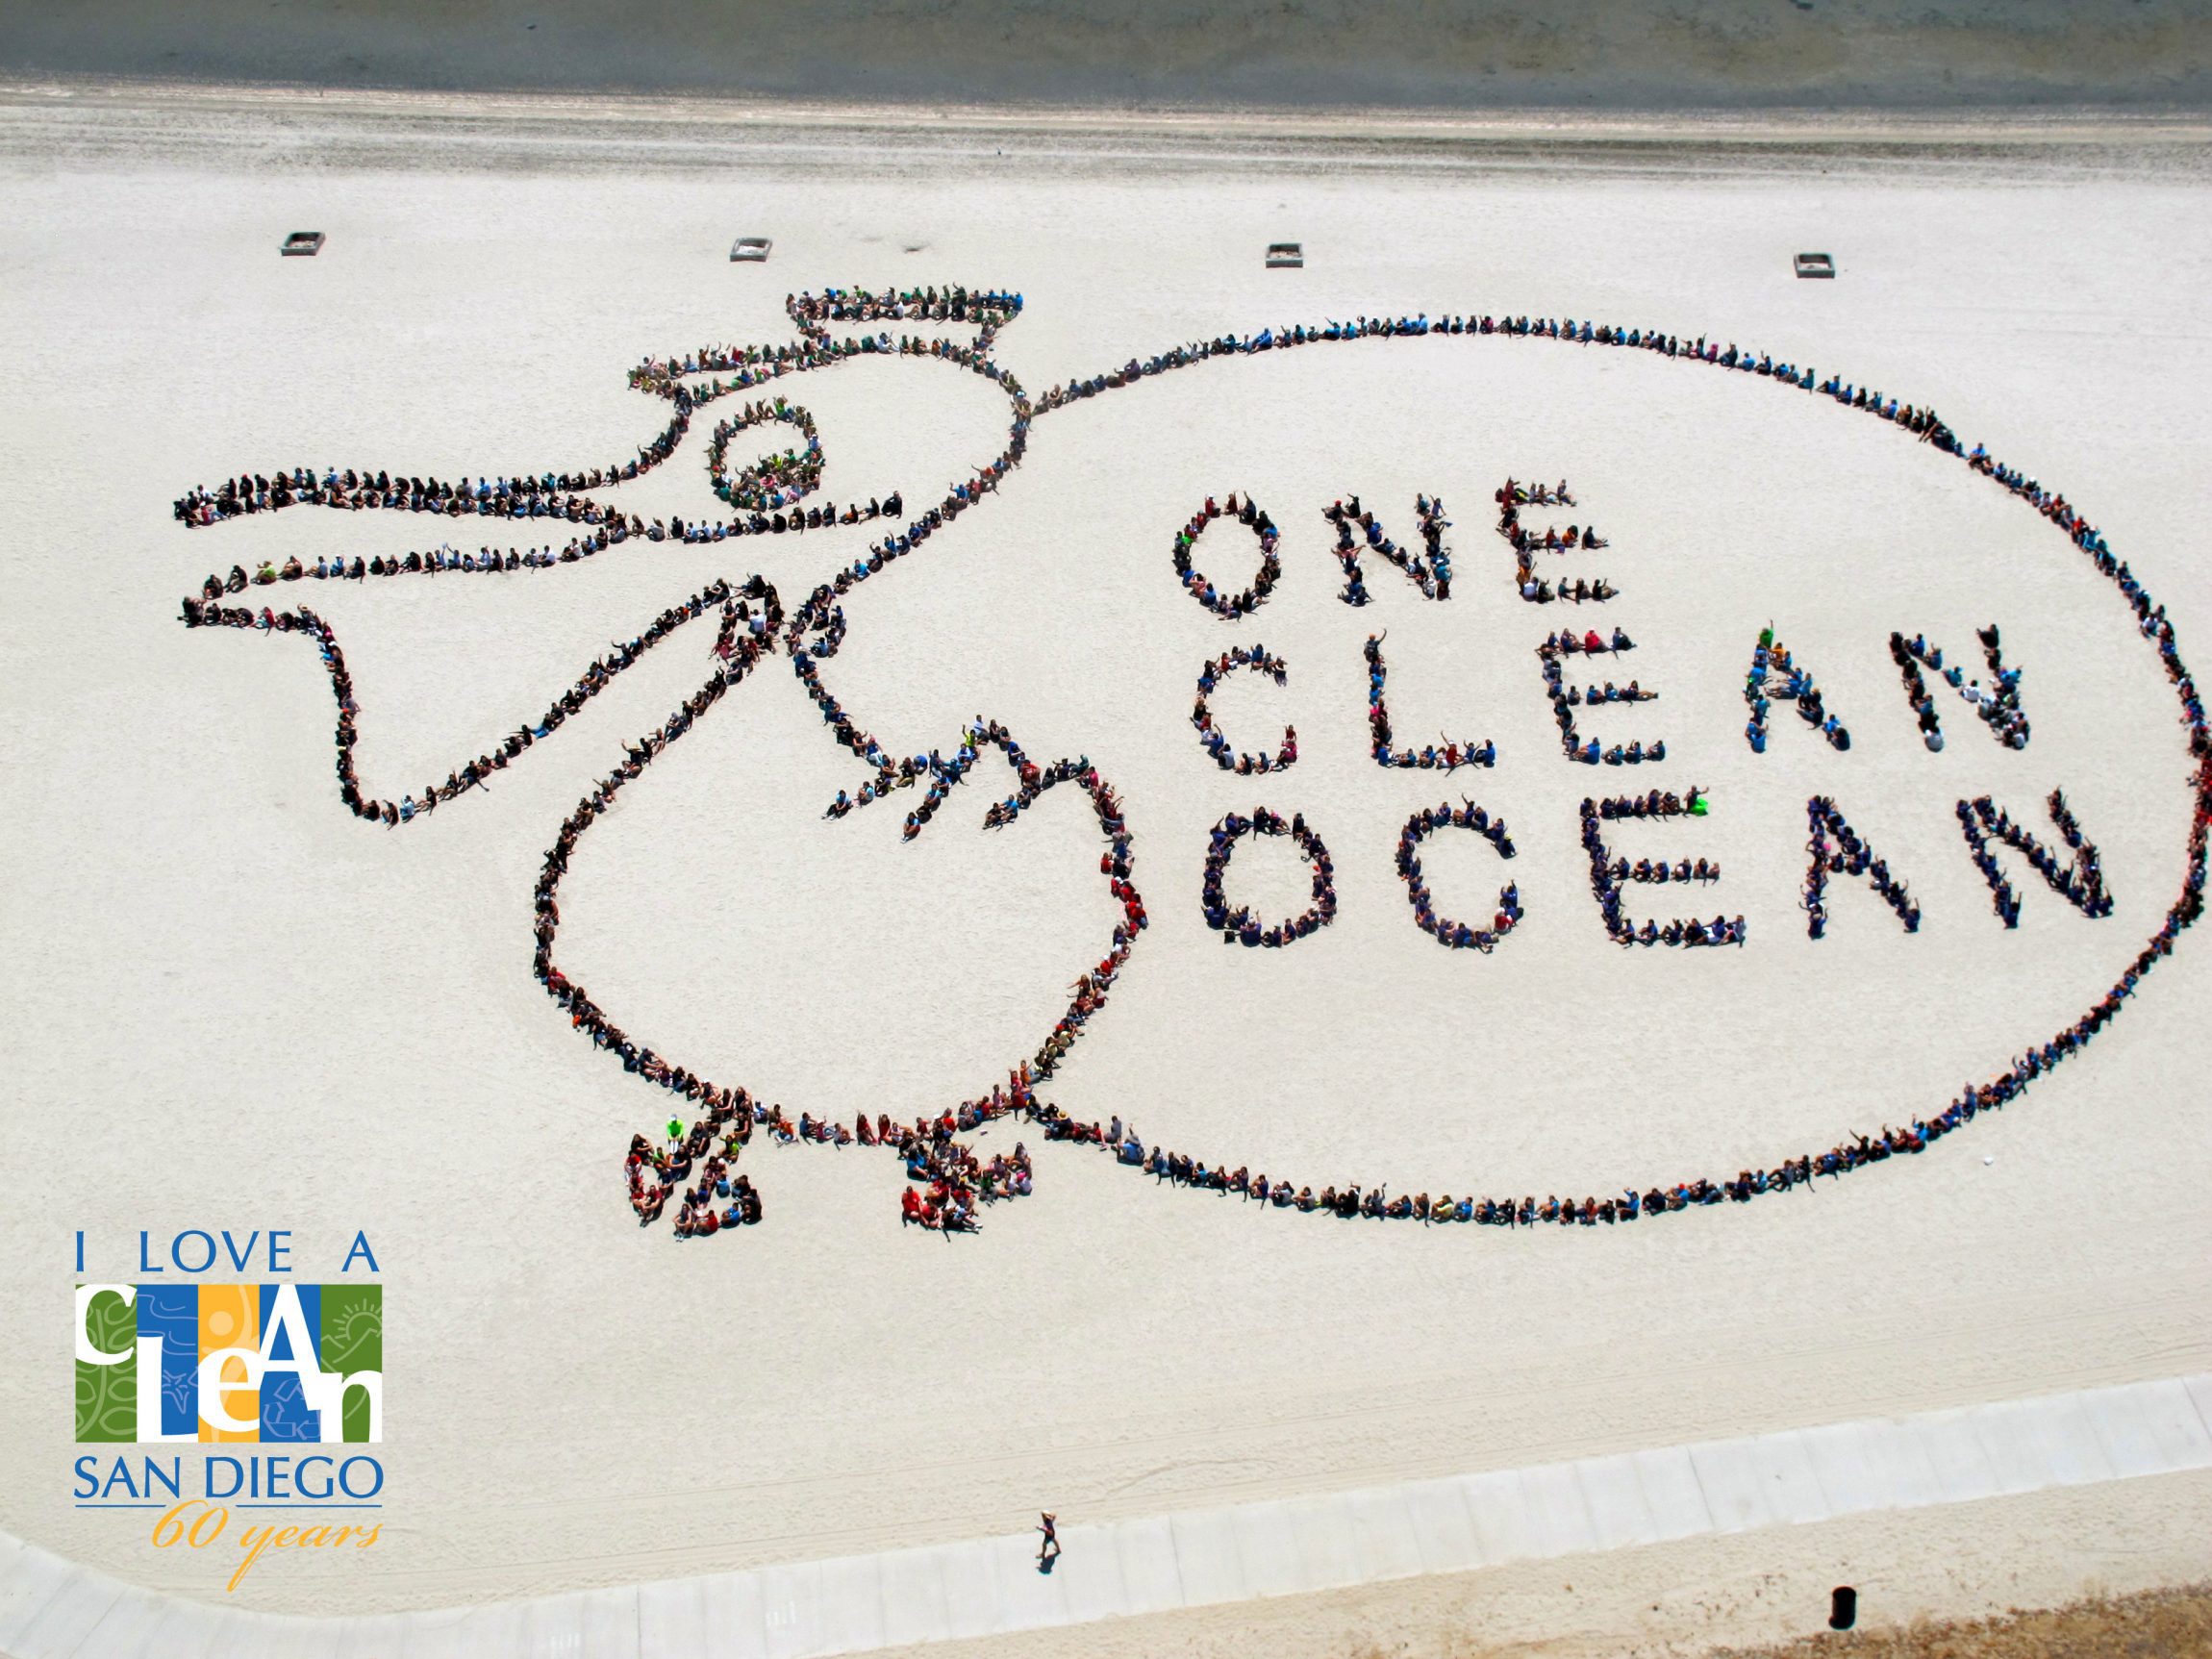 Kids' Ocean Day 2014